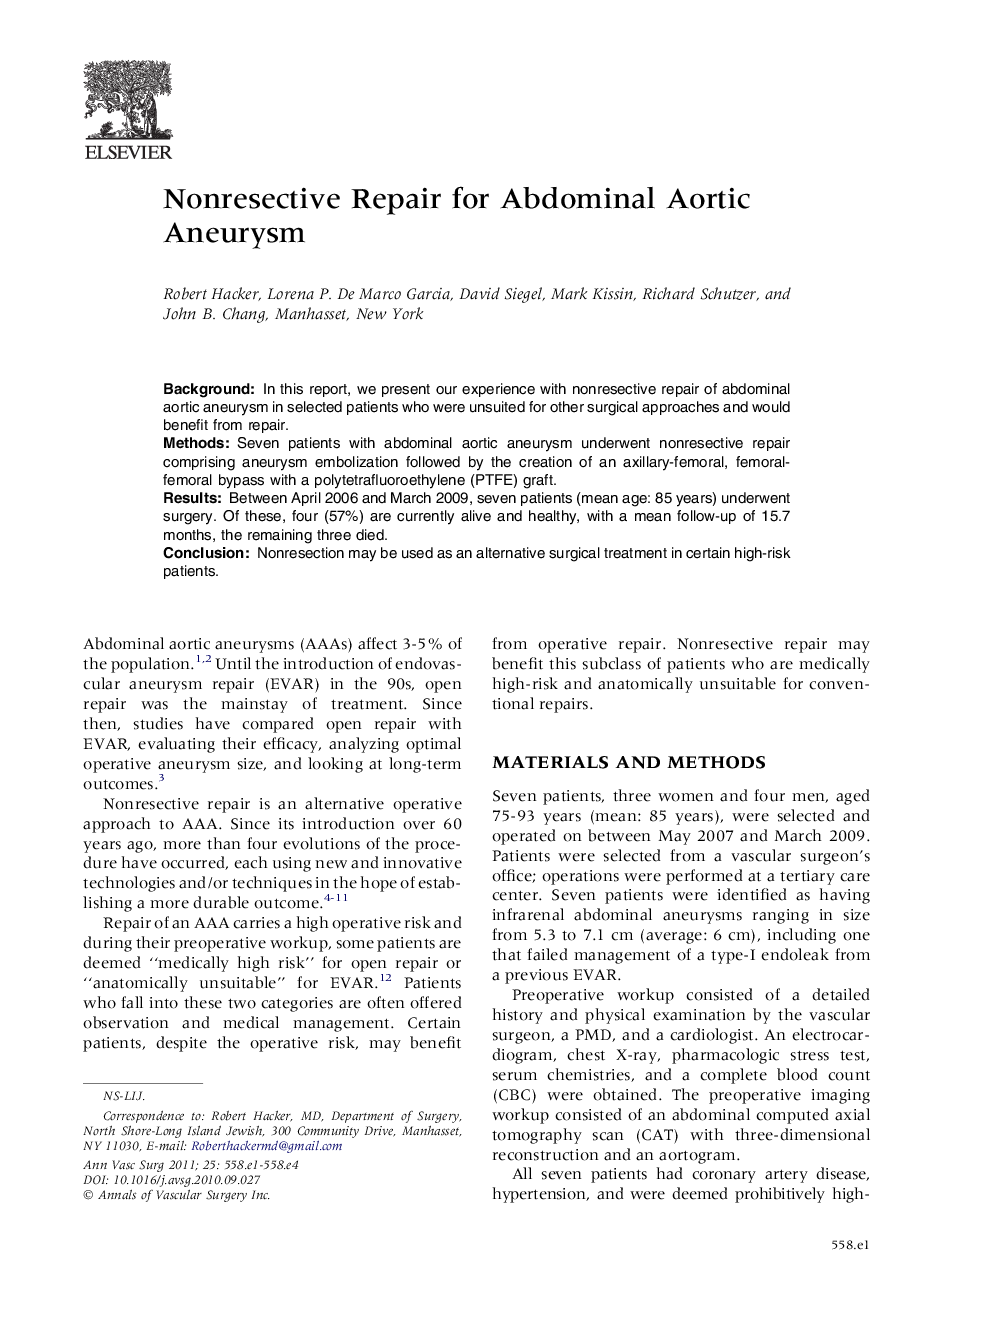 Nonresective Repair for Abdominal Aortic Aneurysm